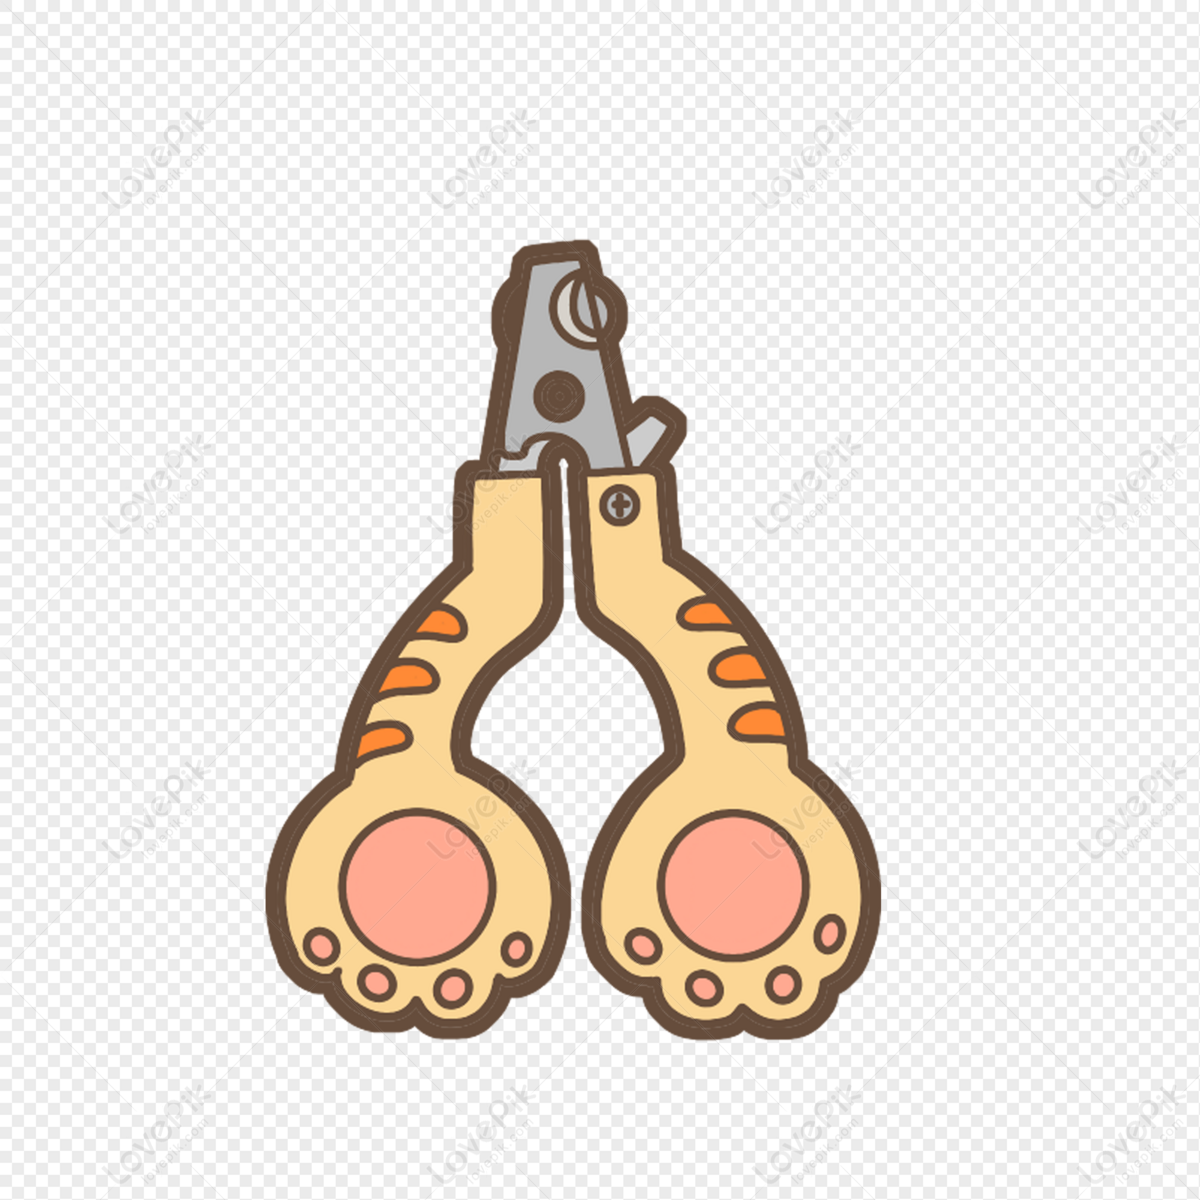 Vector Illustration Of Nail Clippers Trim Fingernails - Png Download  (#2044722) - PikPng